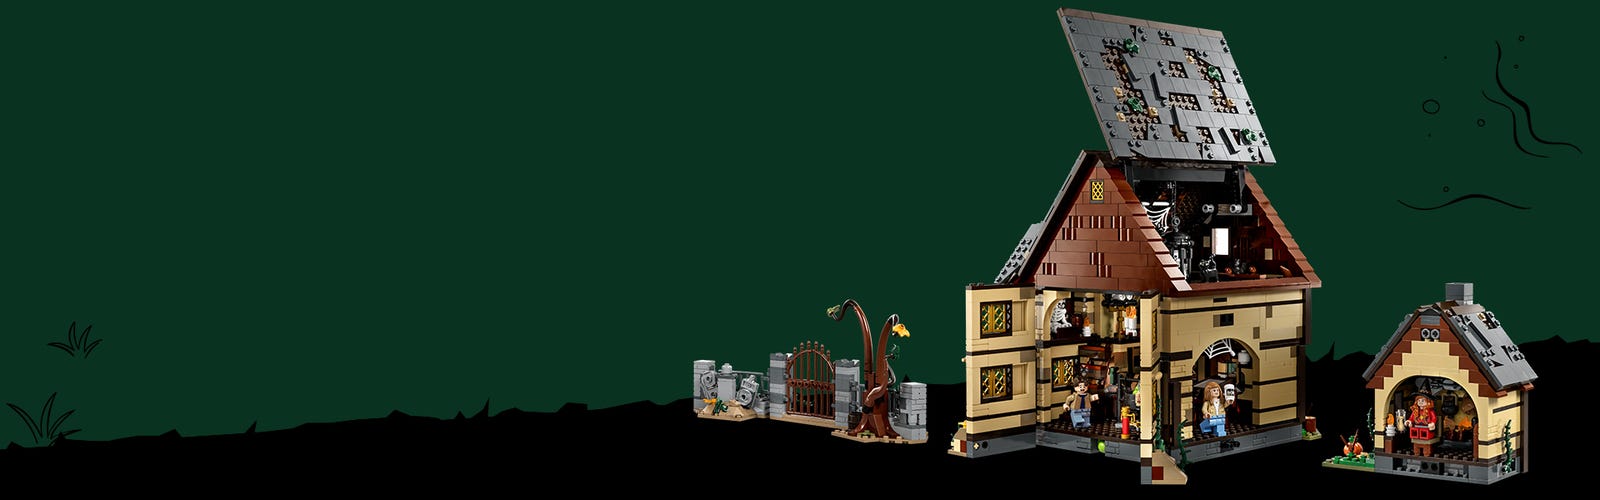 LEGO brick-built cottage based on the film Hocus Pocus